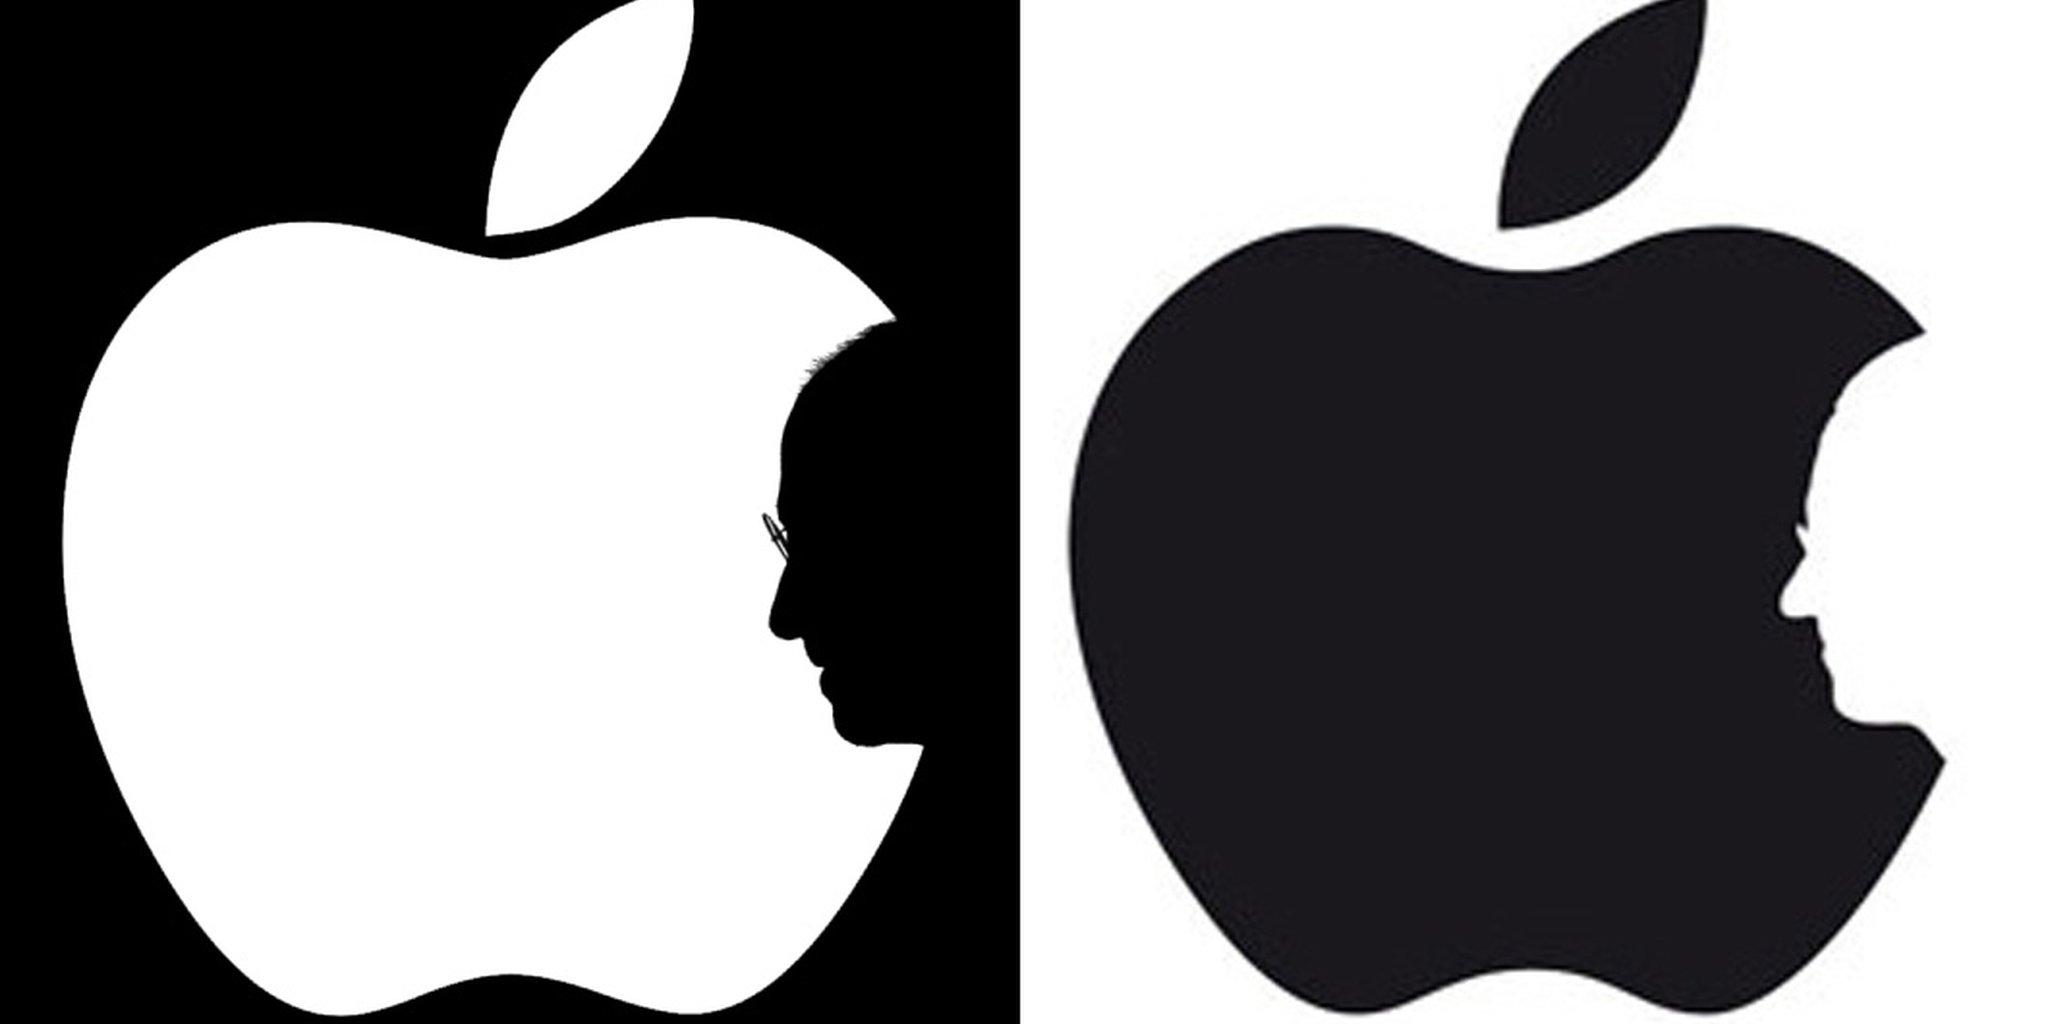 Steve Jobs with Apple Logo - Two illustrators claim credit for the same Steve Jobs portrait